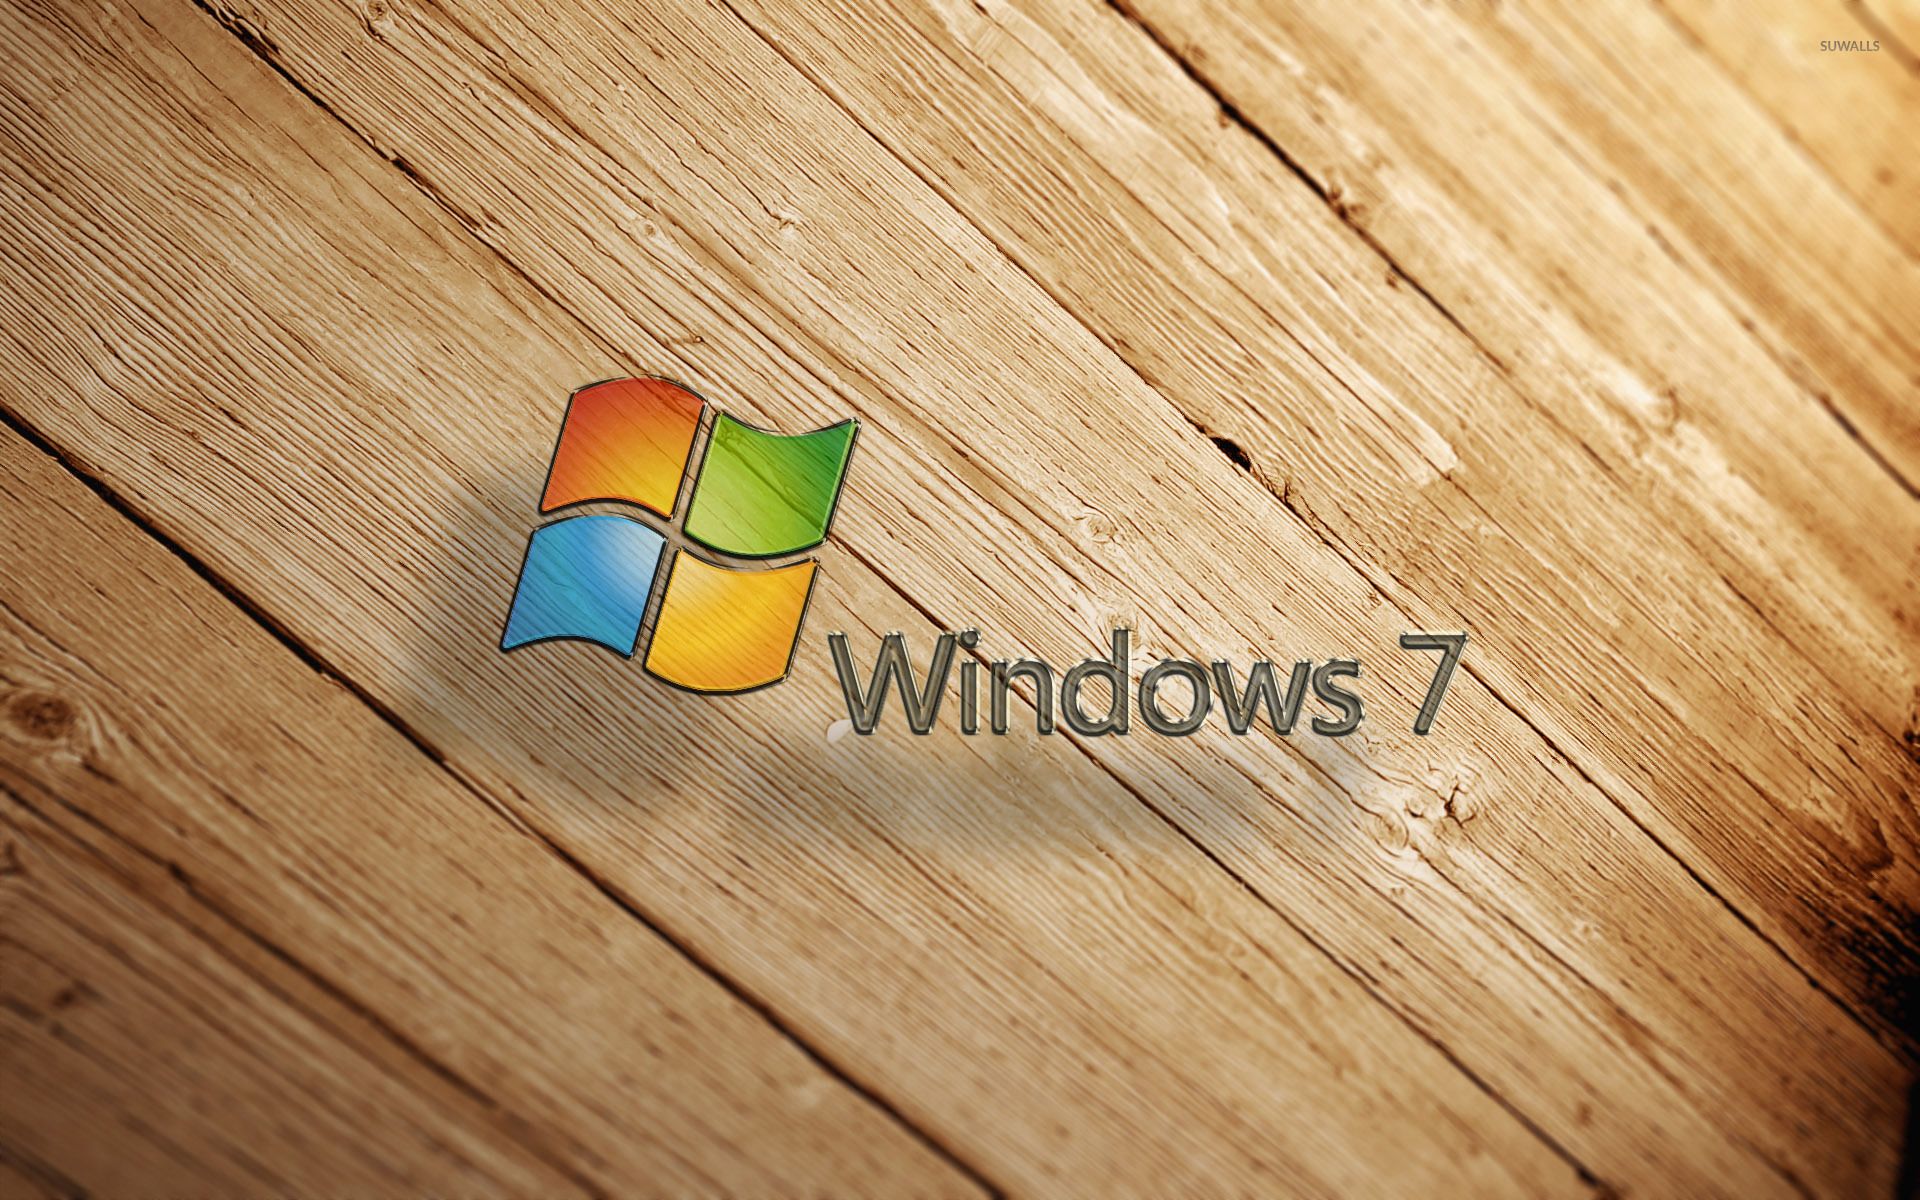 Windows 7 [7] wallpaper wallpaper